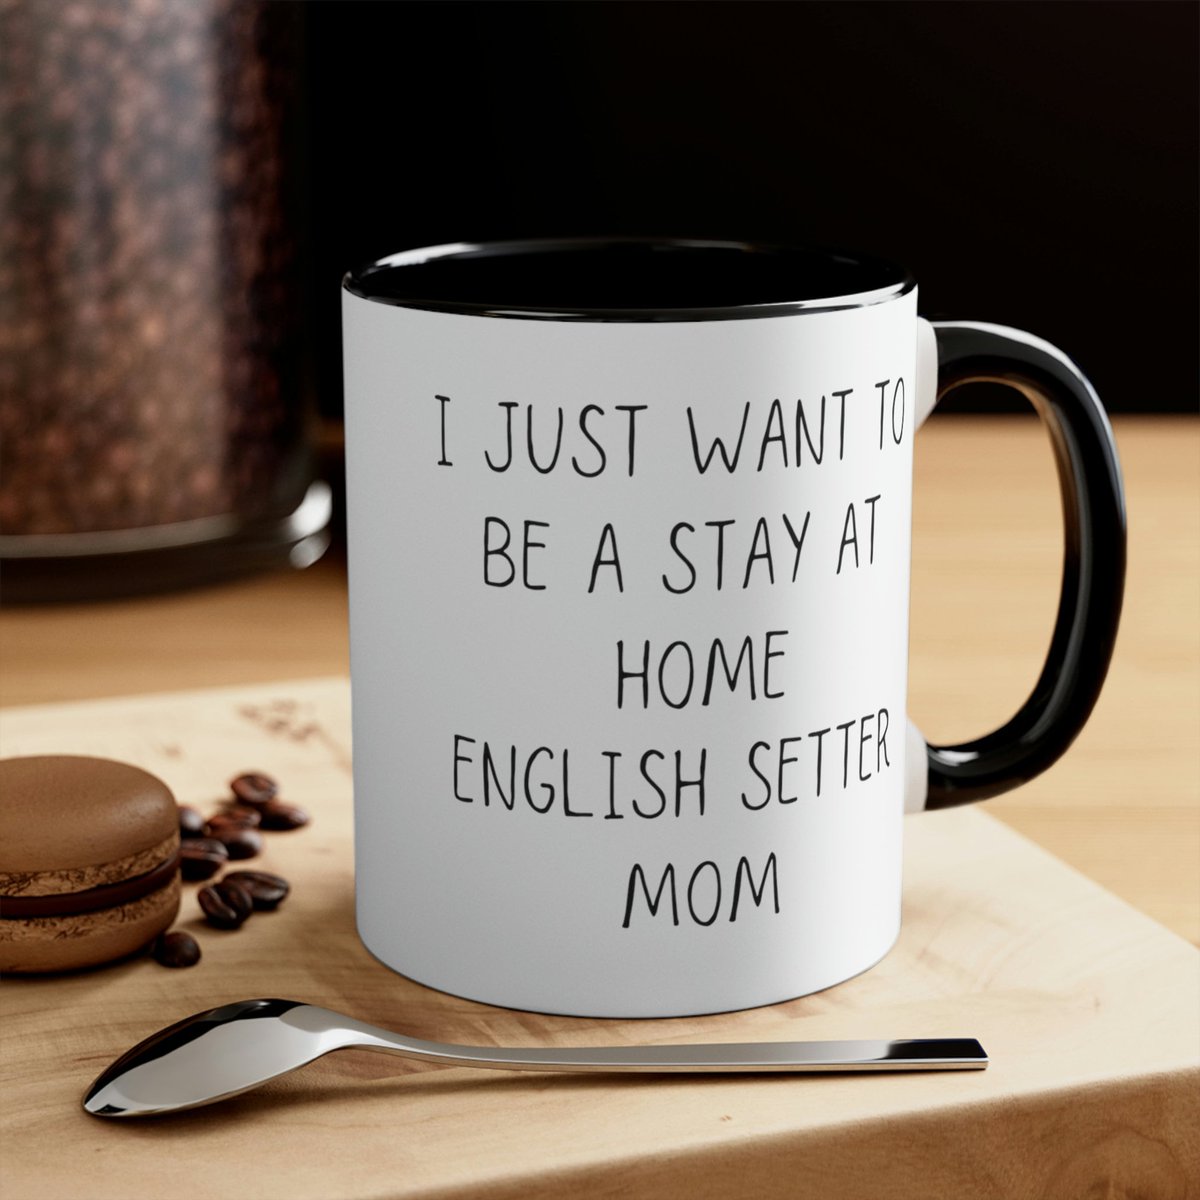 Funny English Setter Mom Gift Mug #englishsetter #englishsetterdog #englishsettergift #settermothersday #englishsettermom #englishsettergift #englishsettermug CLICK HERE TO BUY NOW: etsy.me/3KS0LHN